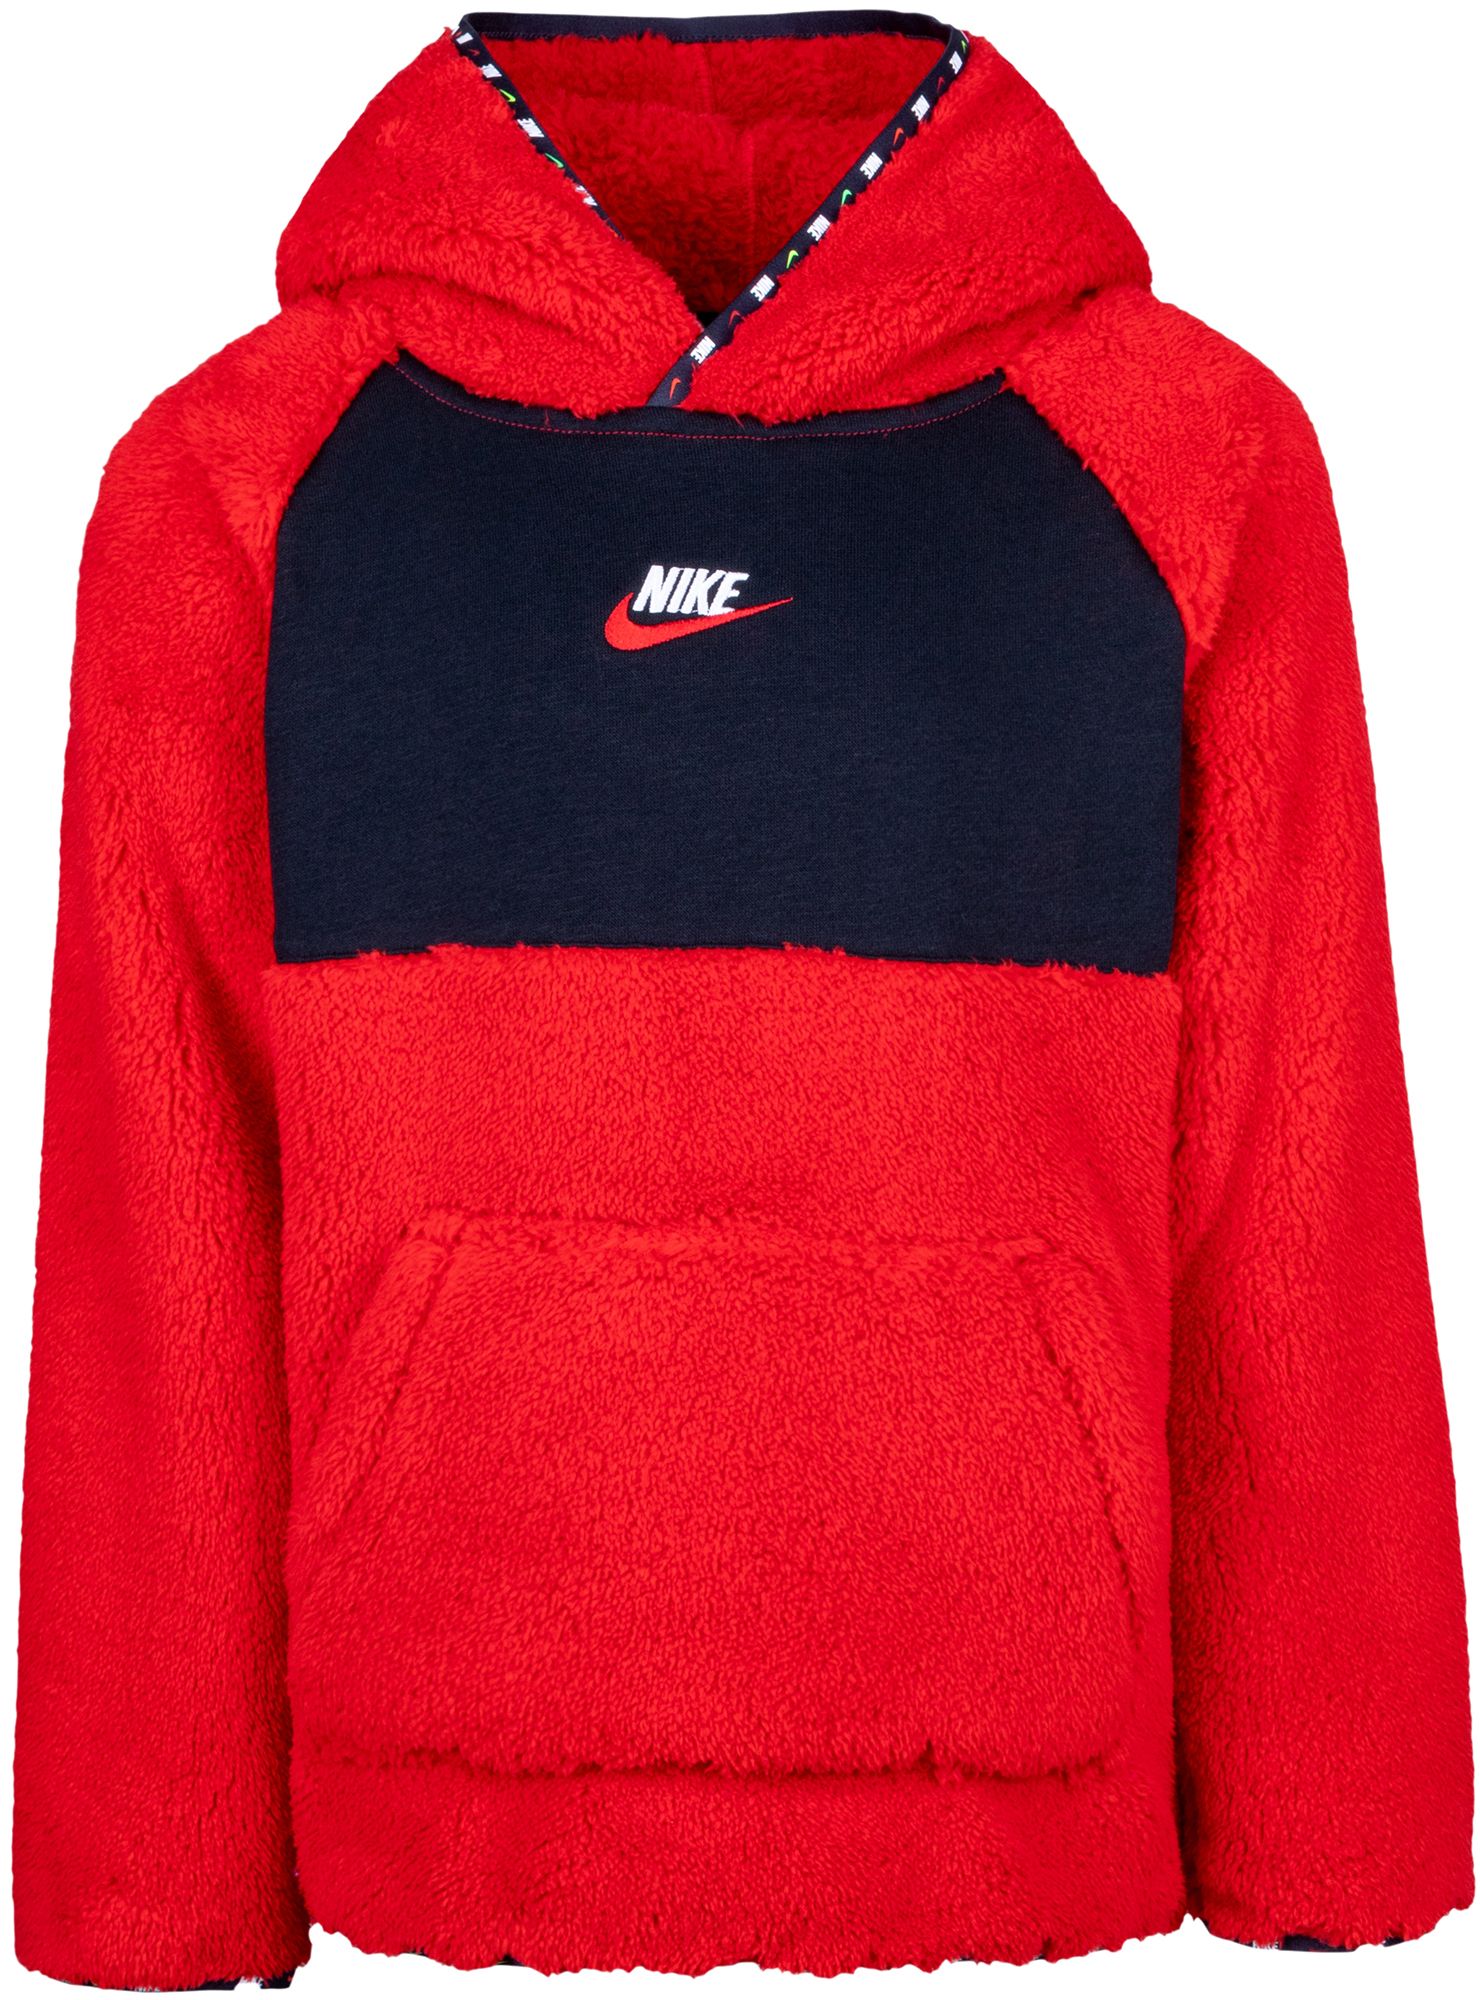 white red nike hoodie